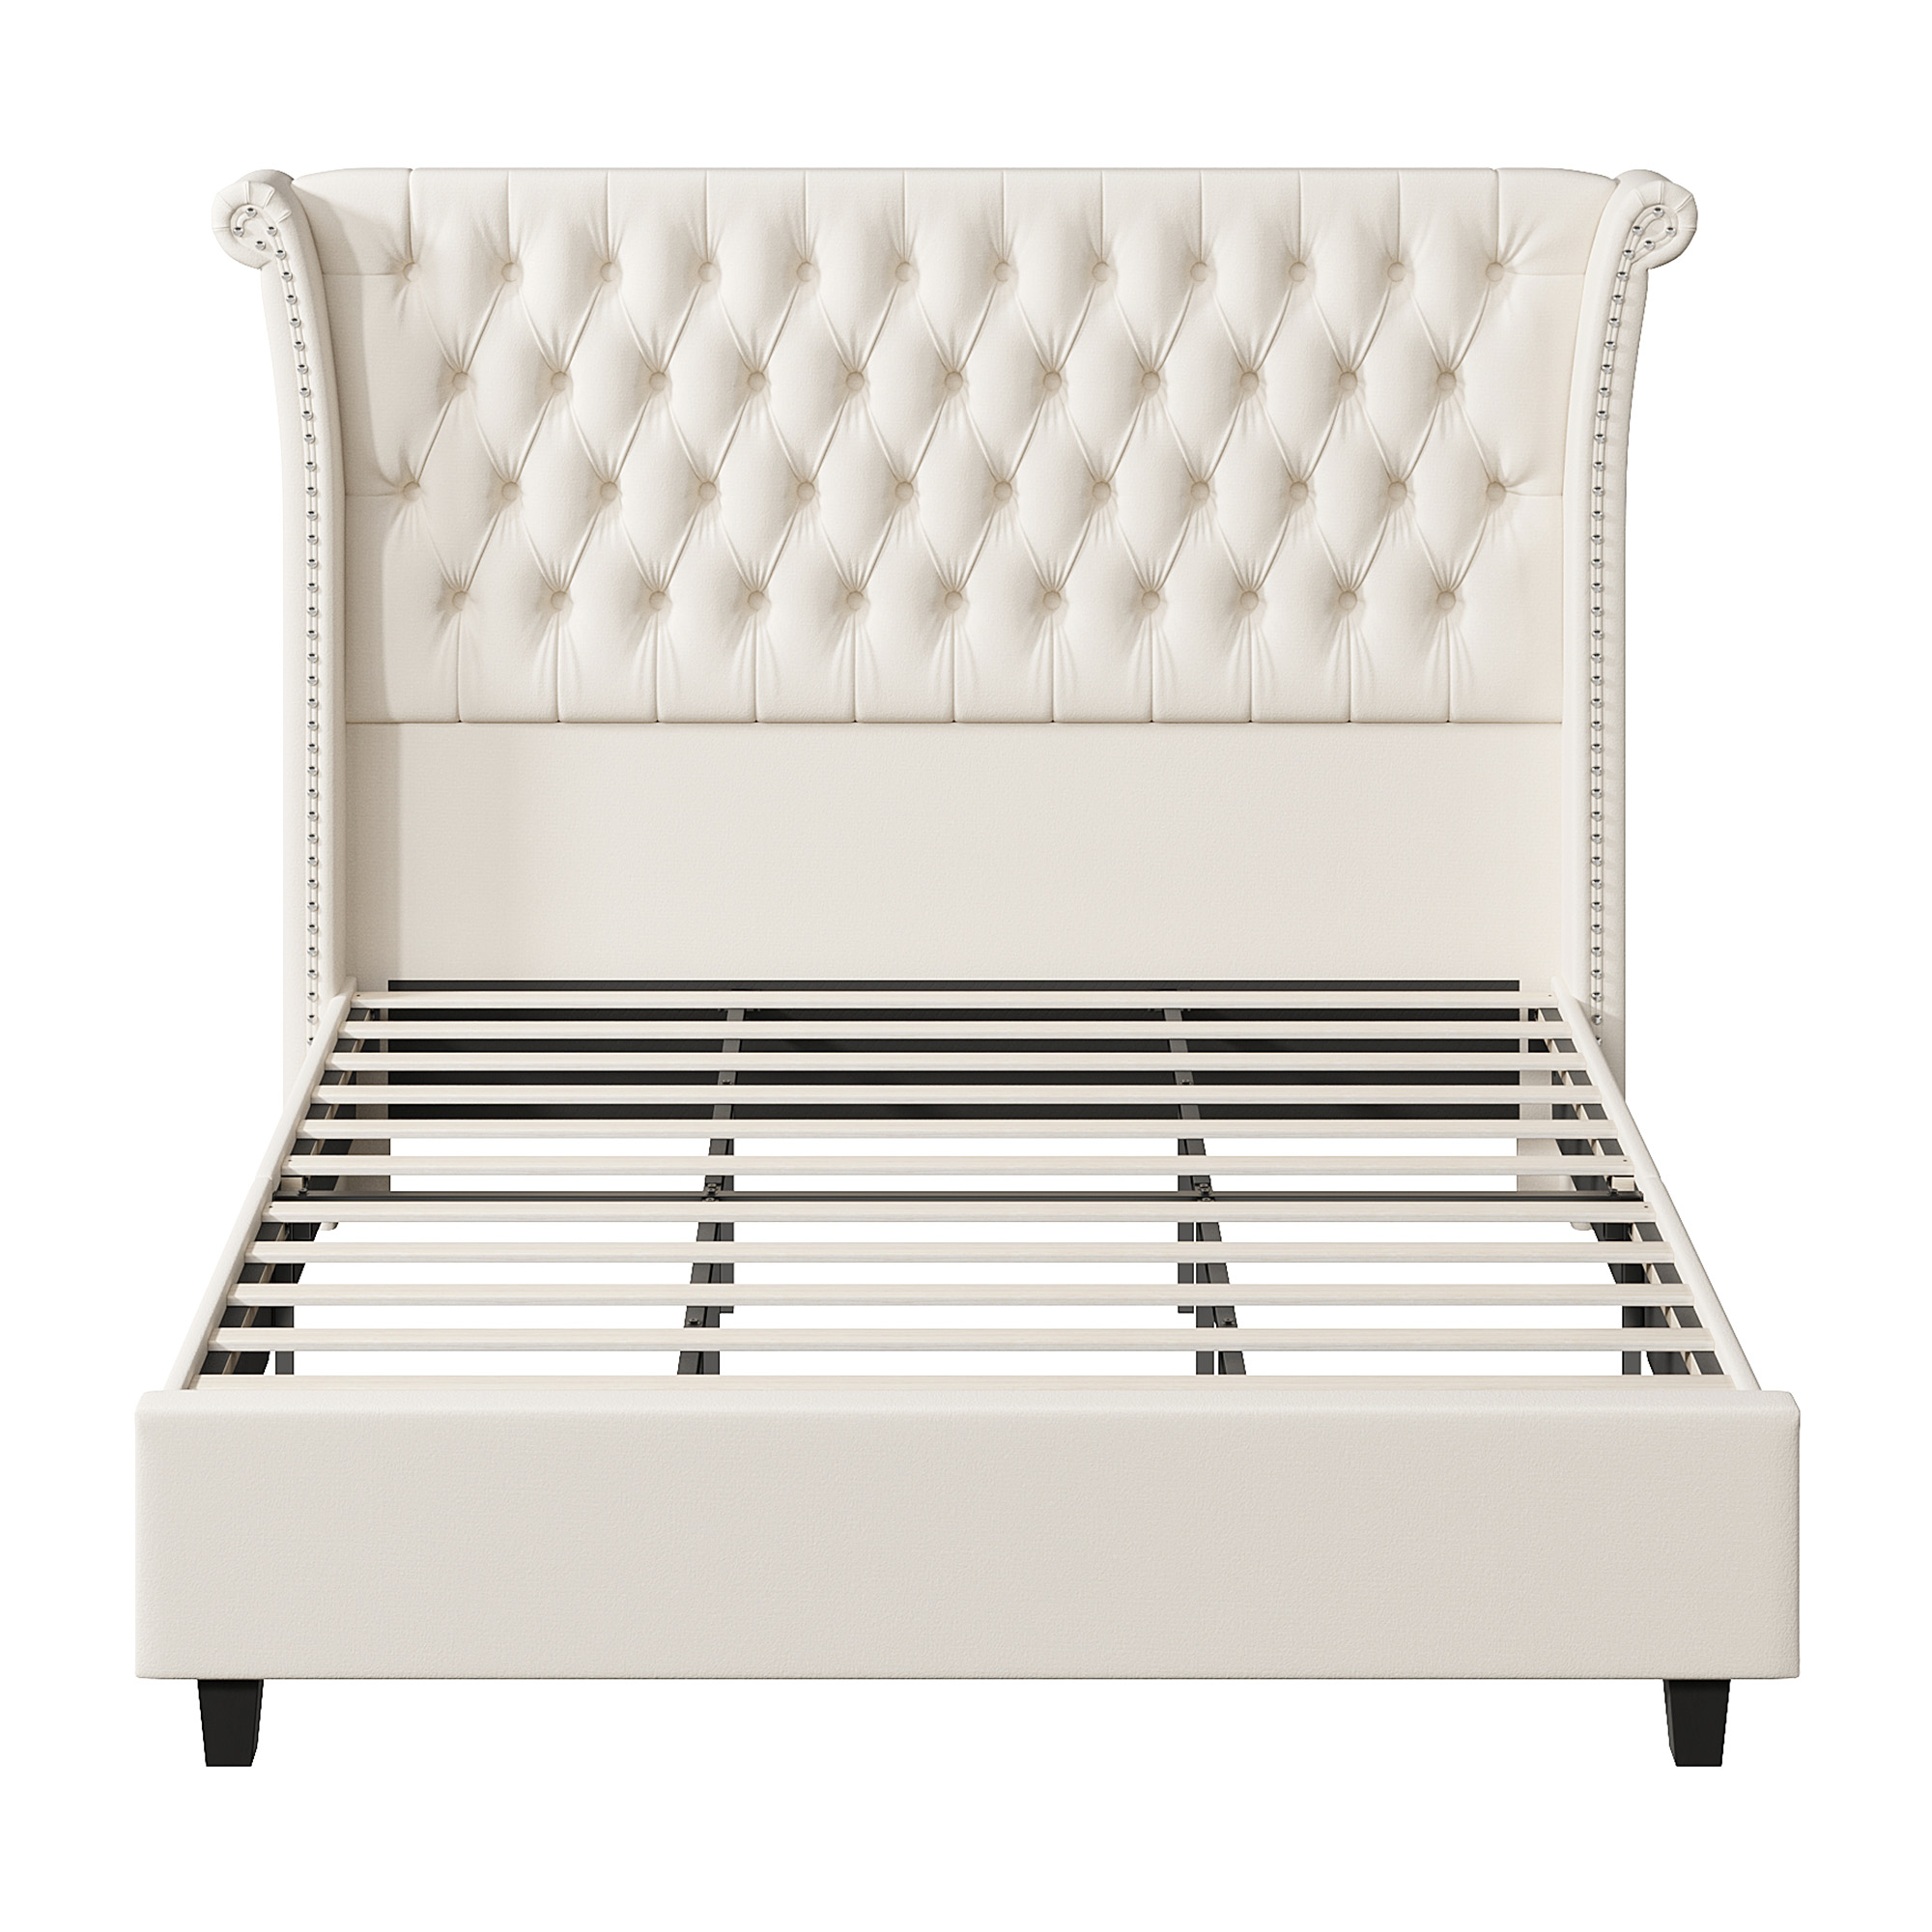 Homfa King Size Bed Frame, Modern Velvet Tufted Upholstered Platform Bed with Rivet Rolled Edge High Wingback Headboard, White - image 3 of 7